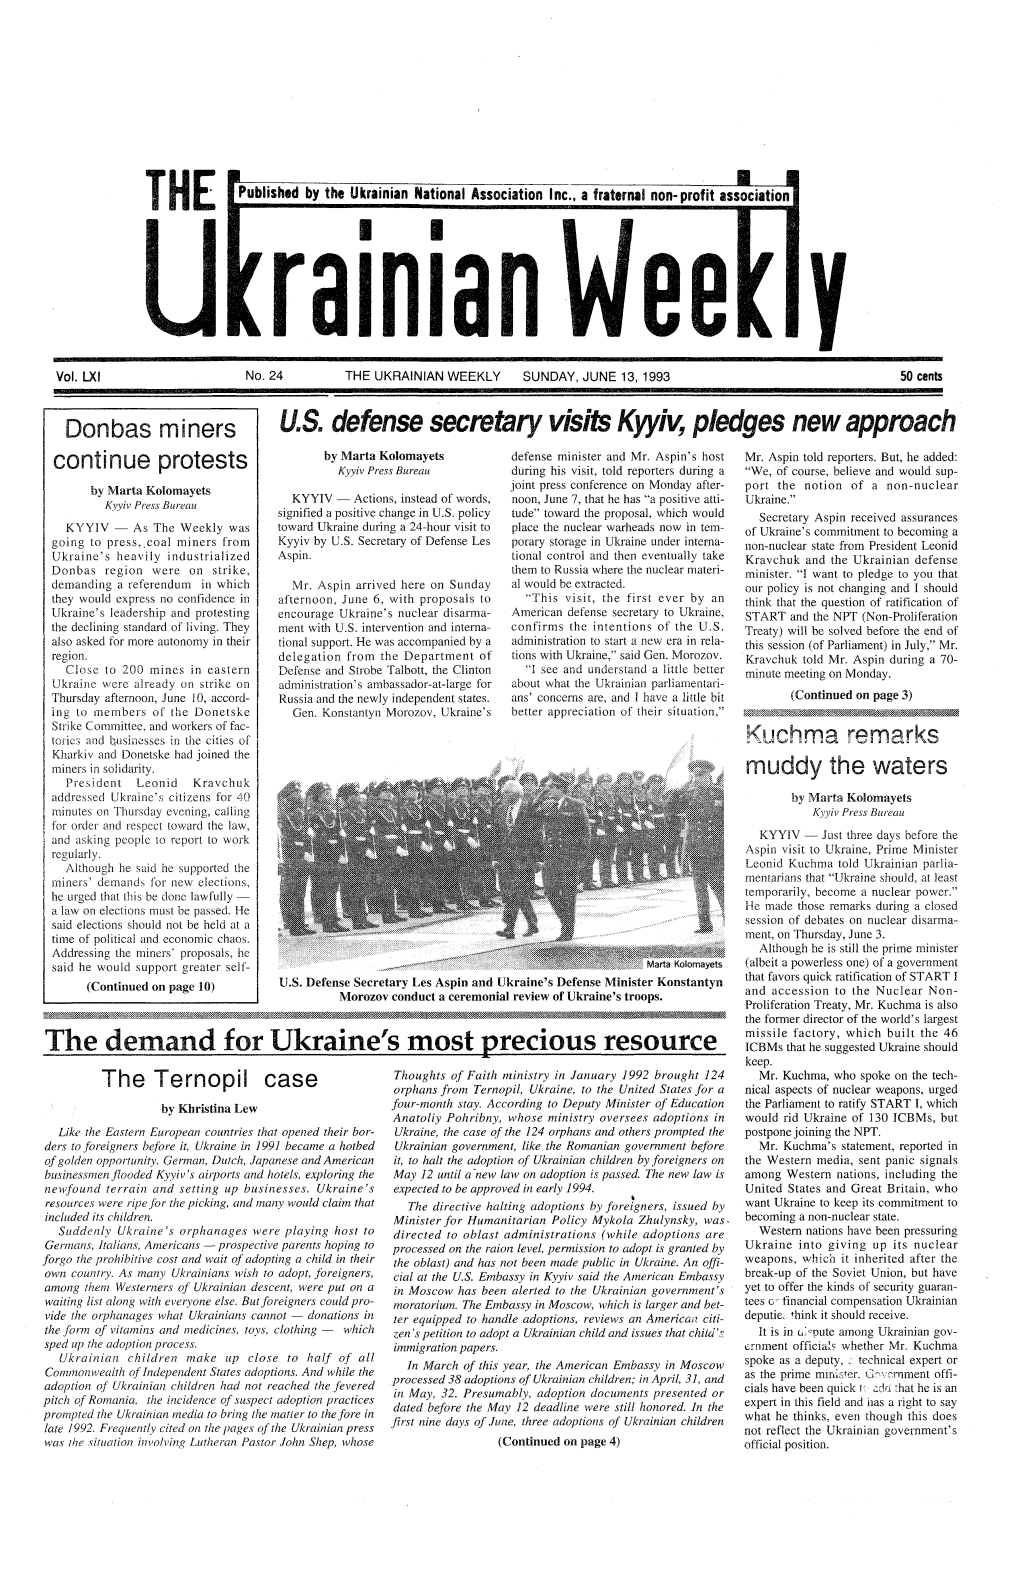 The Ukrainian Weekly 1993, No.24